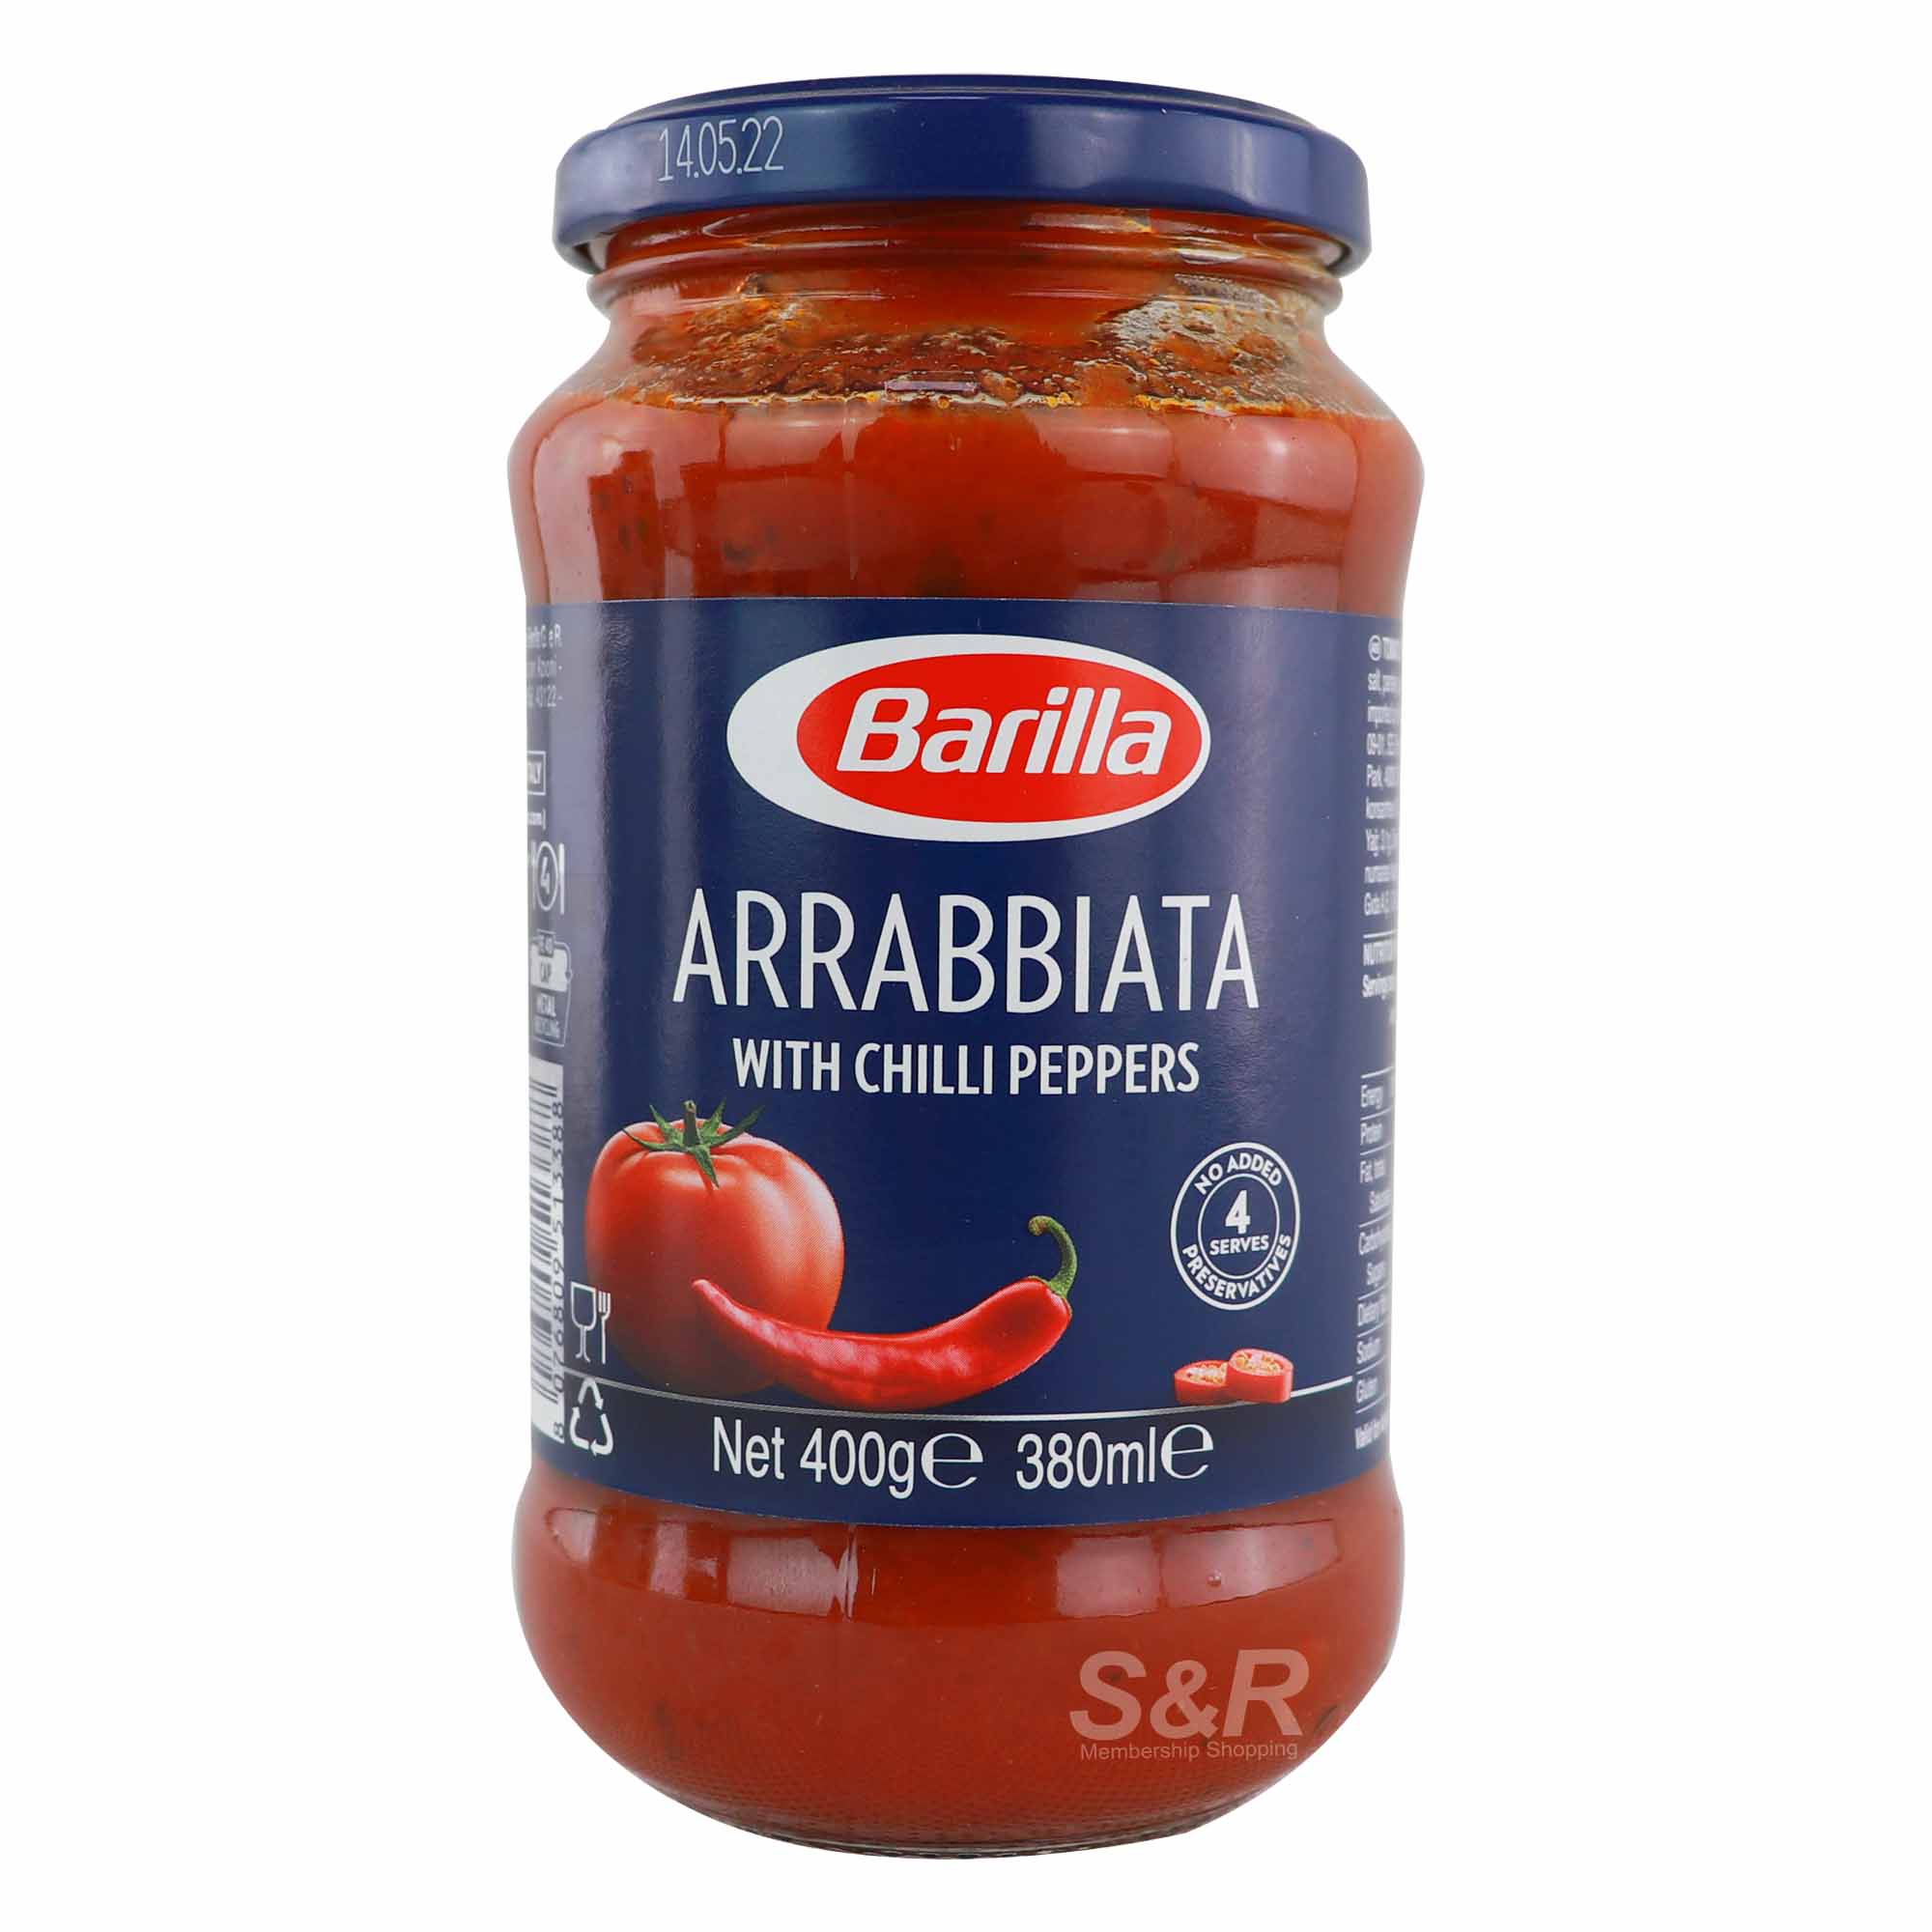 Barilla Arrabbiata with Chili Peppers Pasta Sauce 400g